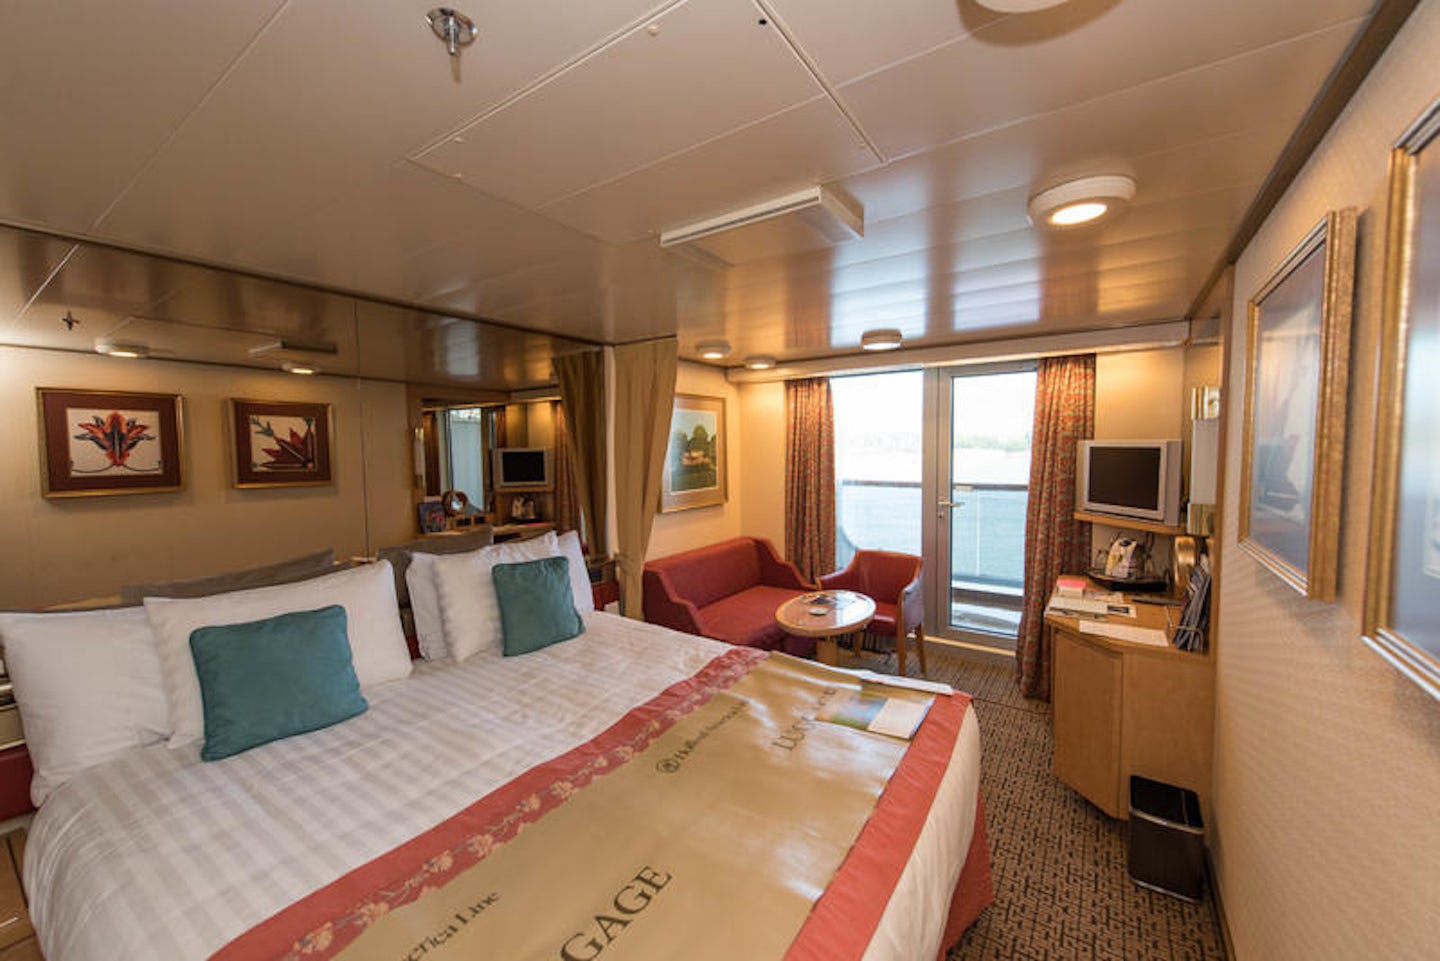 noordam cruise ship cabins